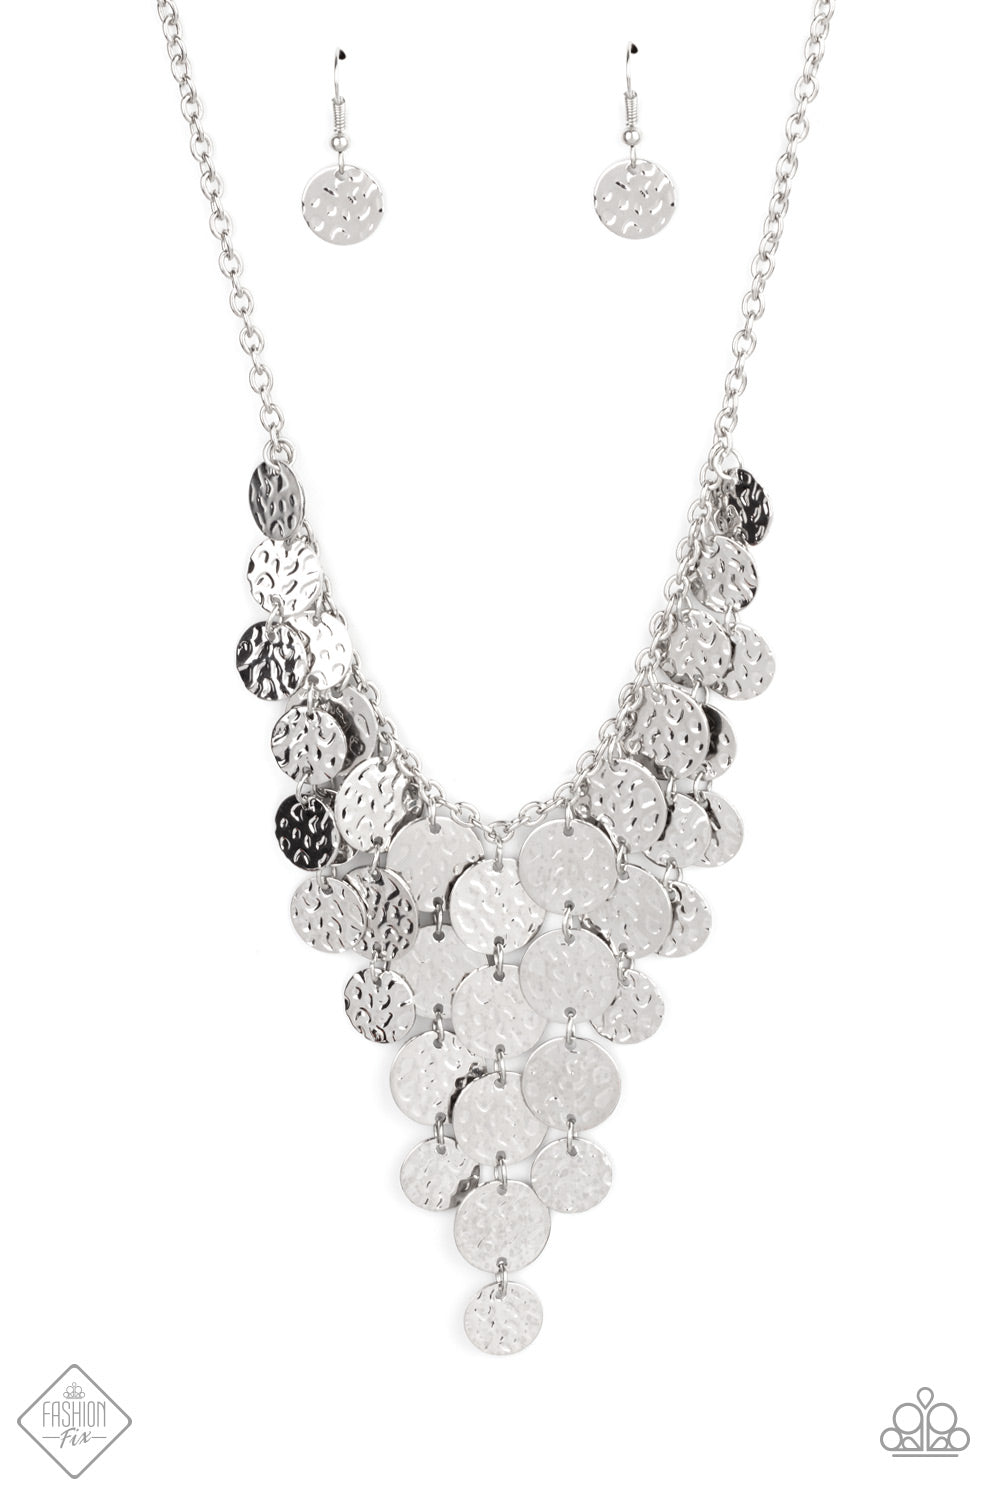 Paparazzi Spotlight Ready Silver Short Necklace - Fashion Fix Magnificent Musings February 2021 - P2ST-SVXX-137XT